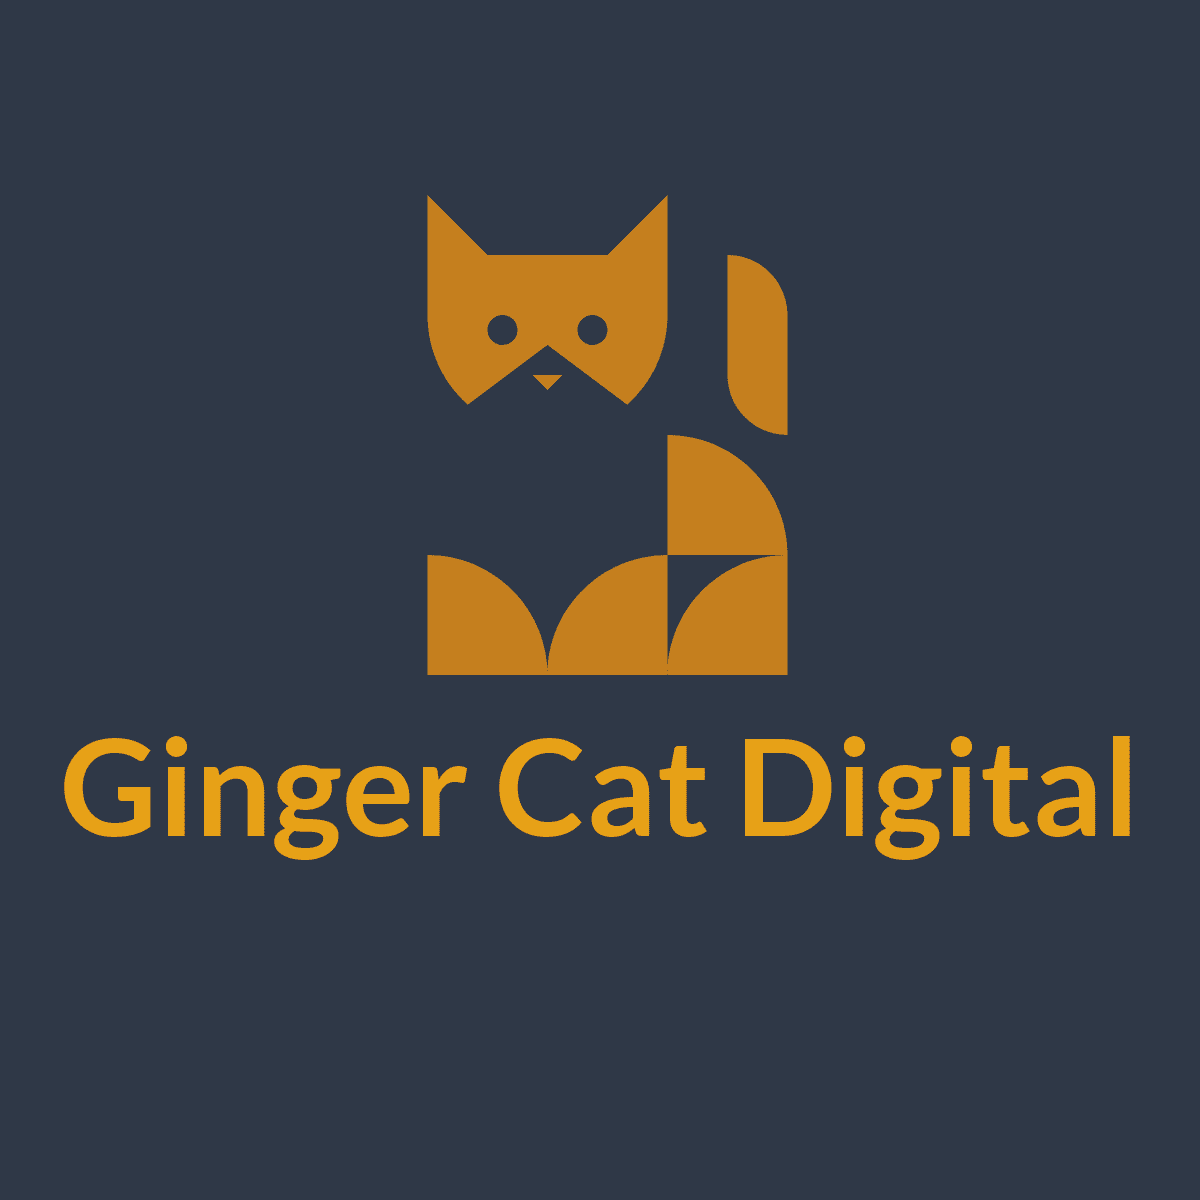 Ginger Cat Digital